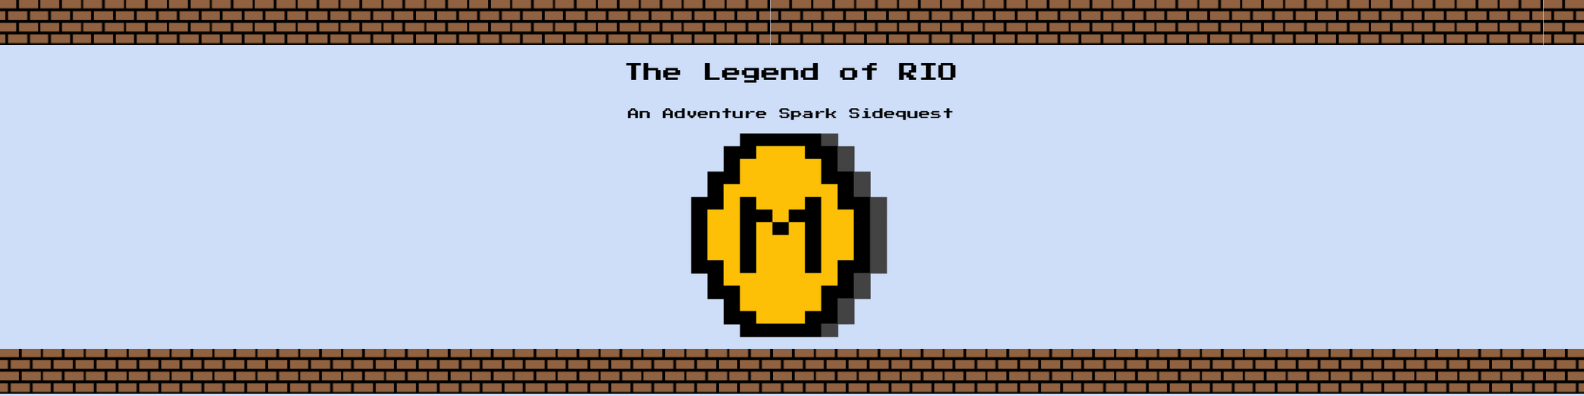 The Legend of RIO